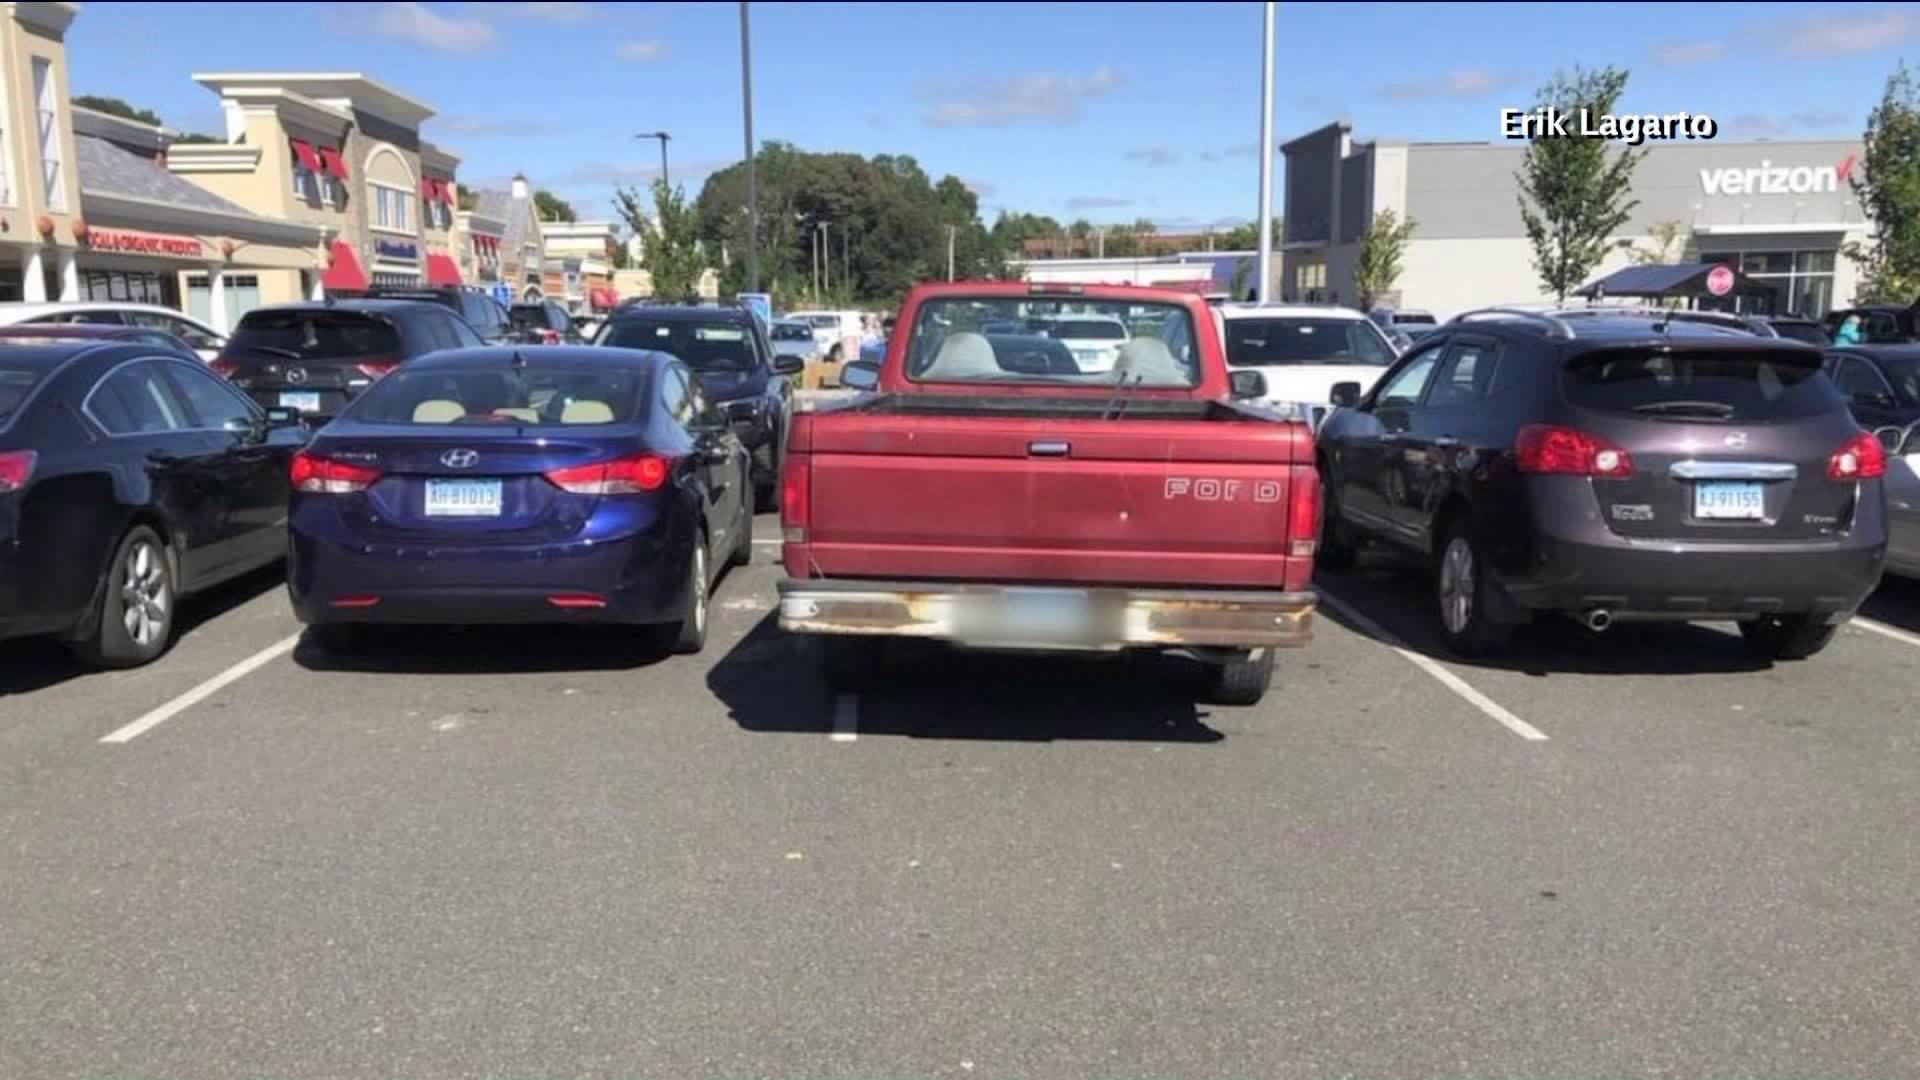 Insta-shaming parking offenders